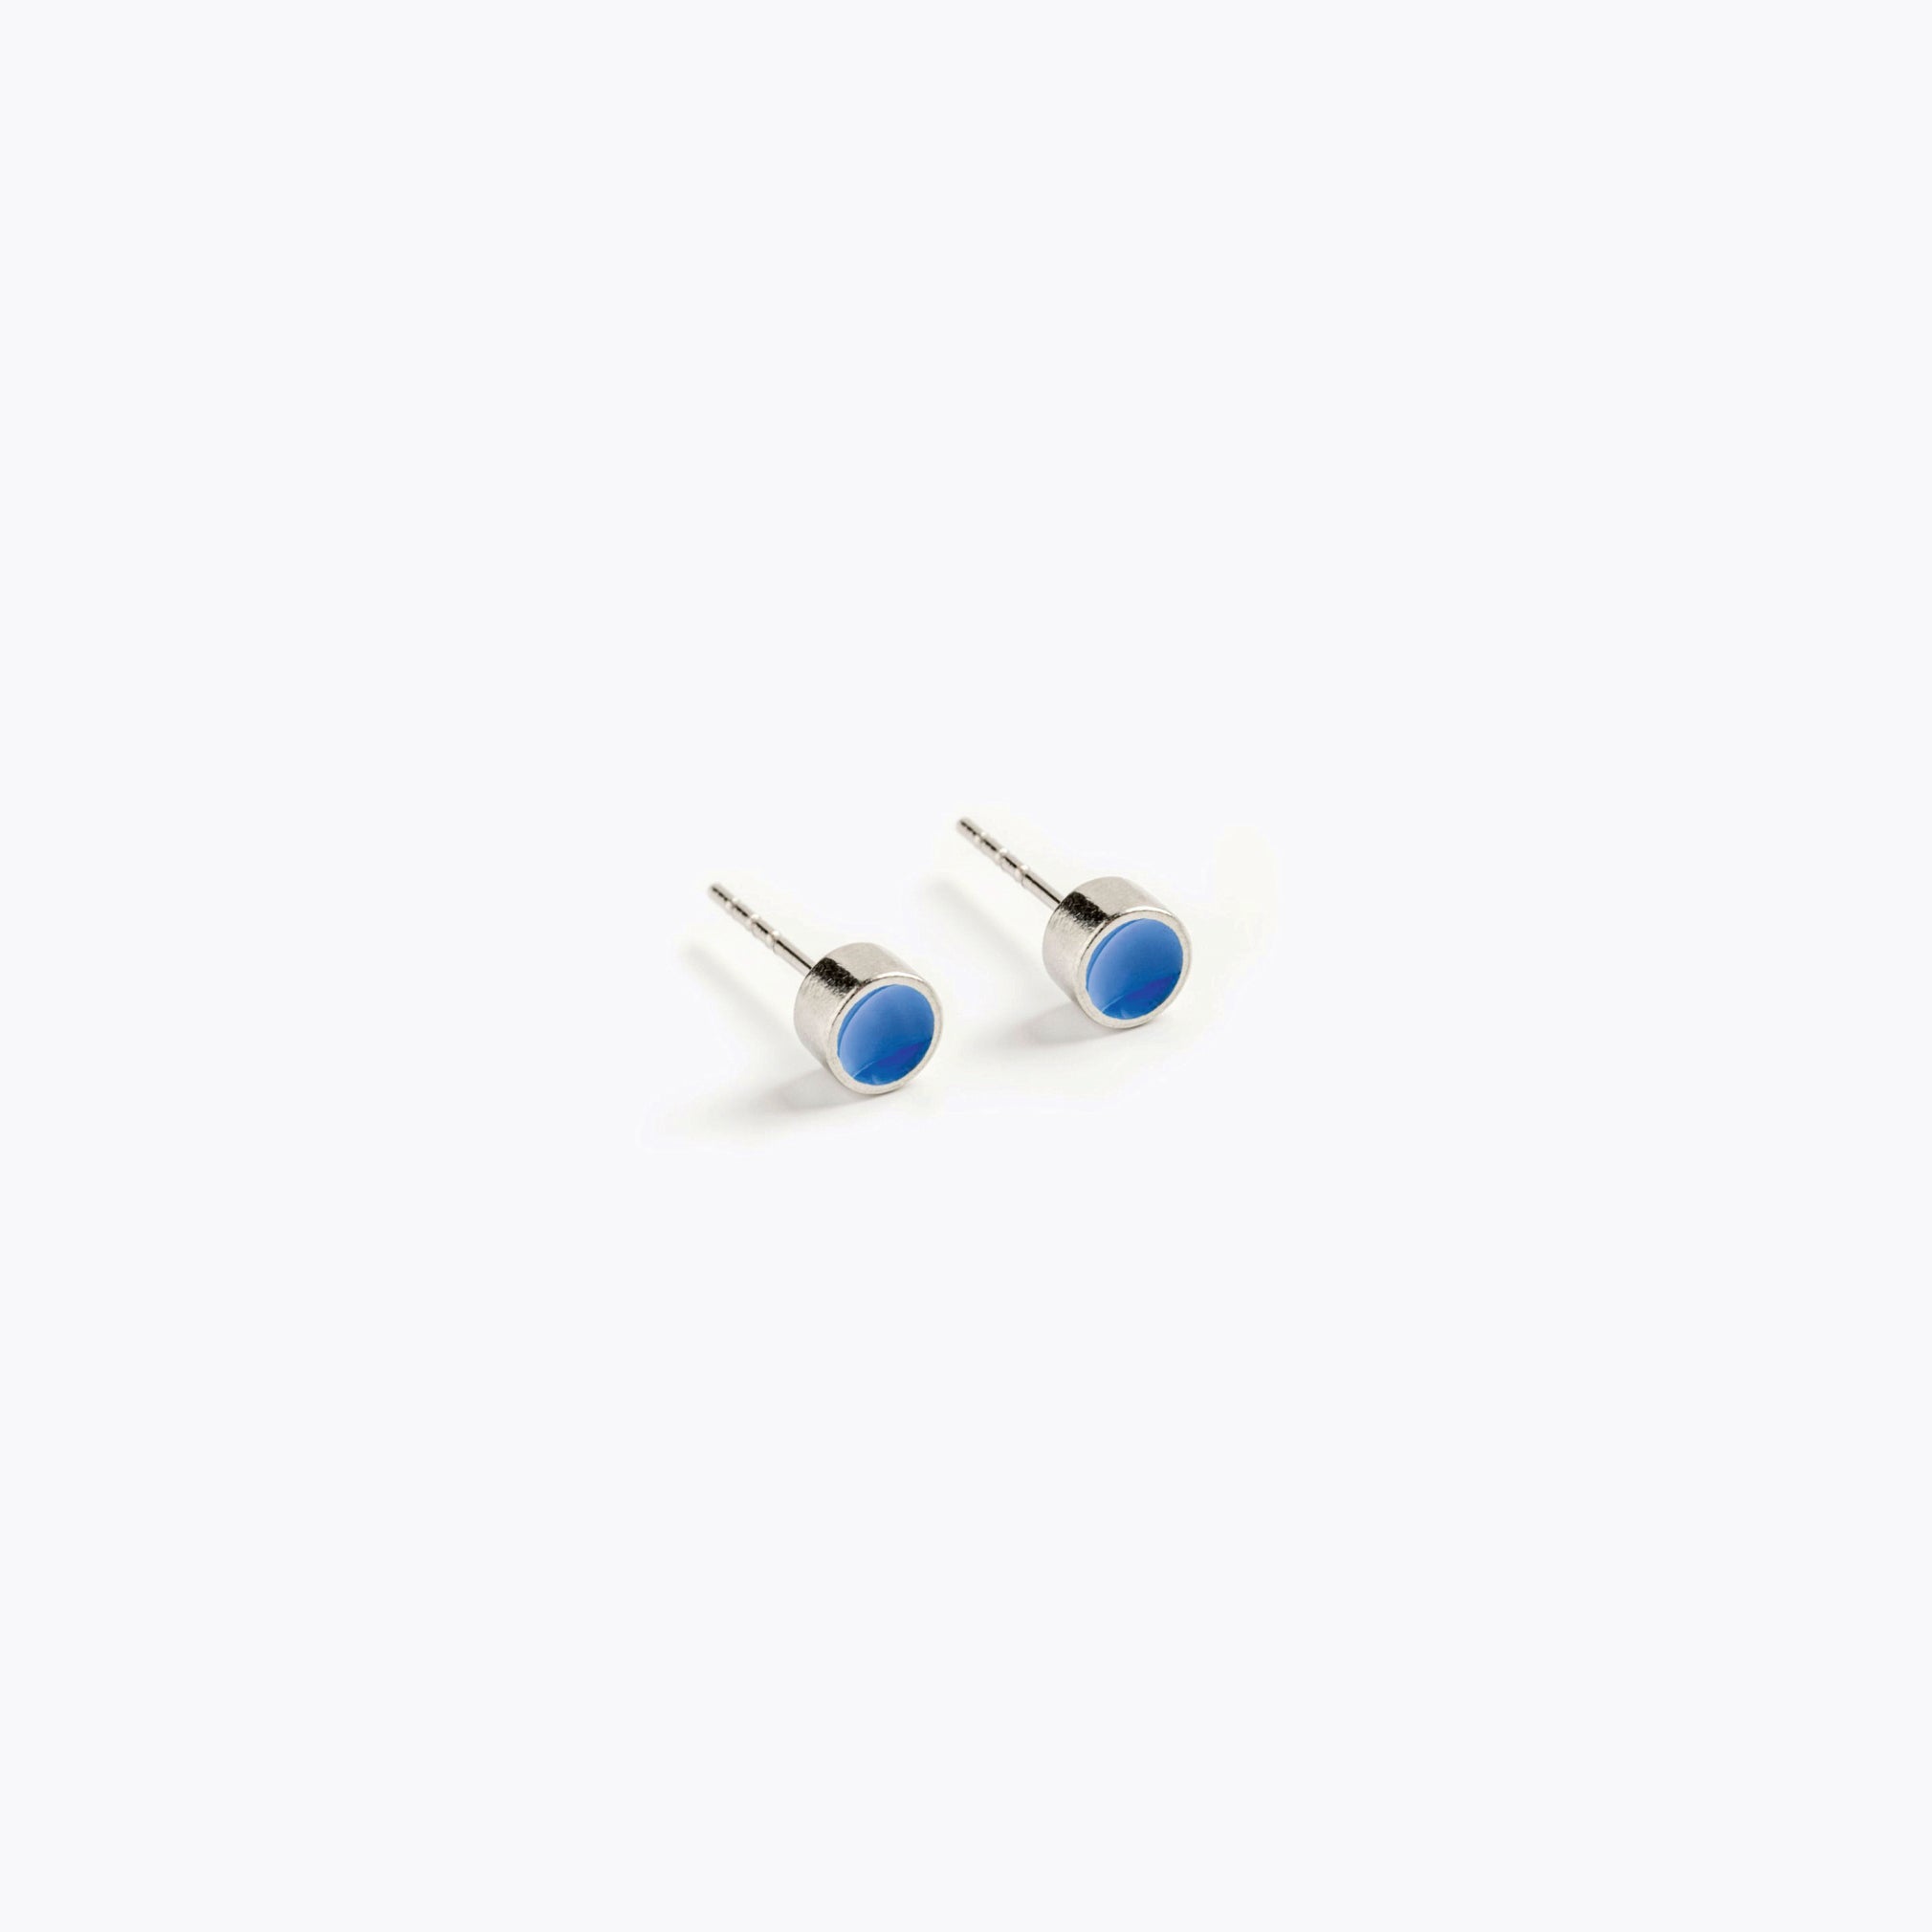 A simple pair of small, blue, circular stud earrings.